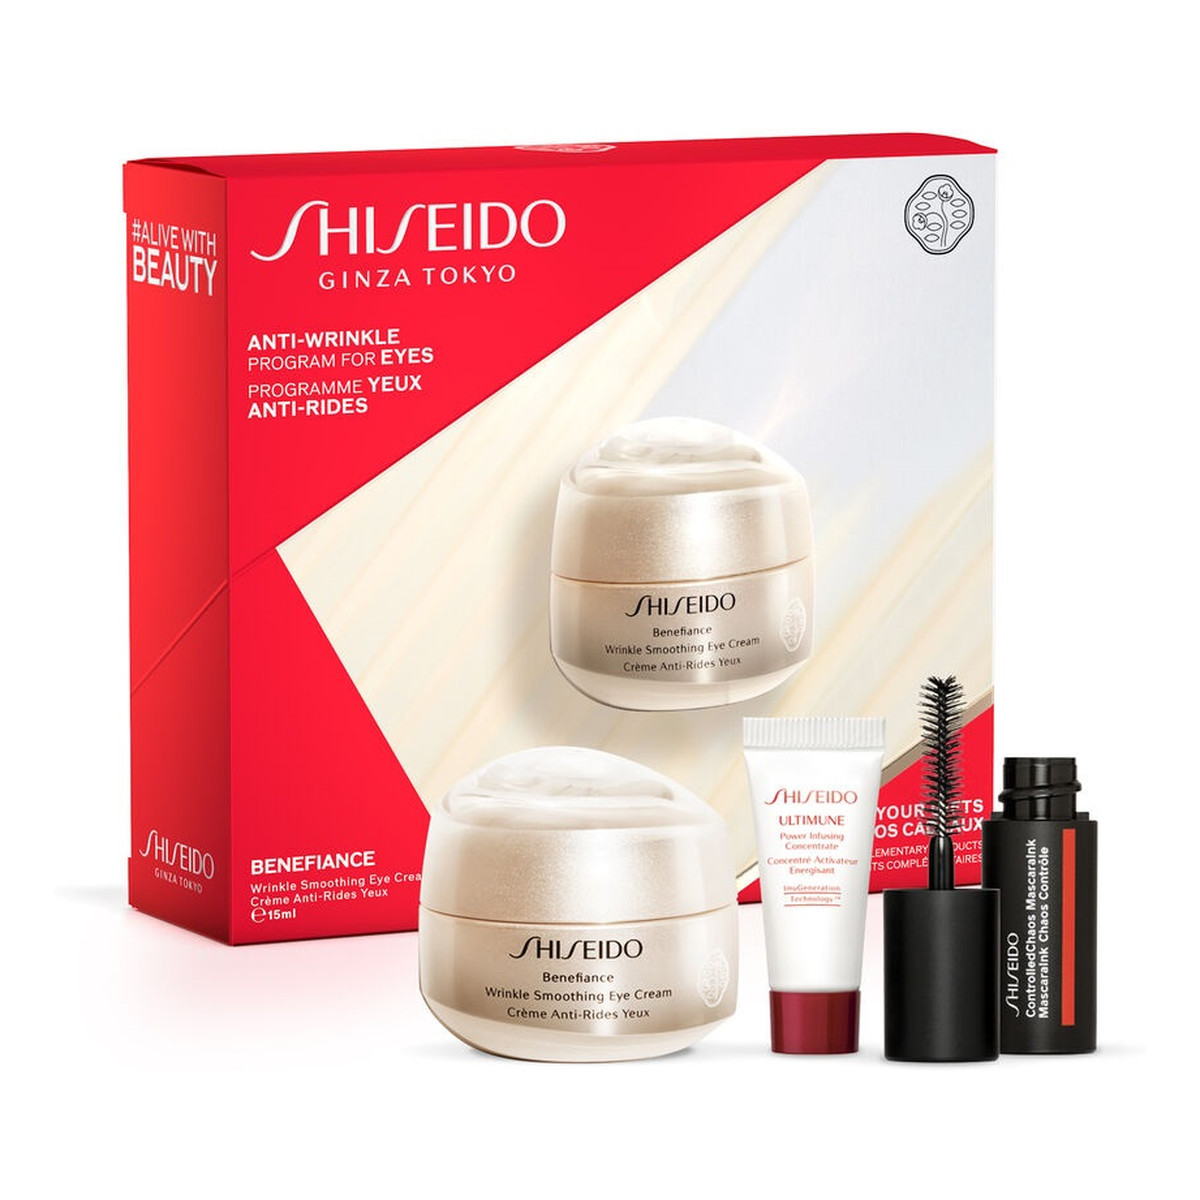 Shiseido Anti-Wrinkle Program For Eyes Zestaw Wrinkle Smoothing Eye Cream + Power Infusing Concentrate + Volume Mascara 01 Black